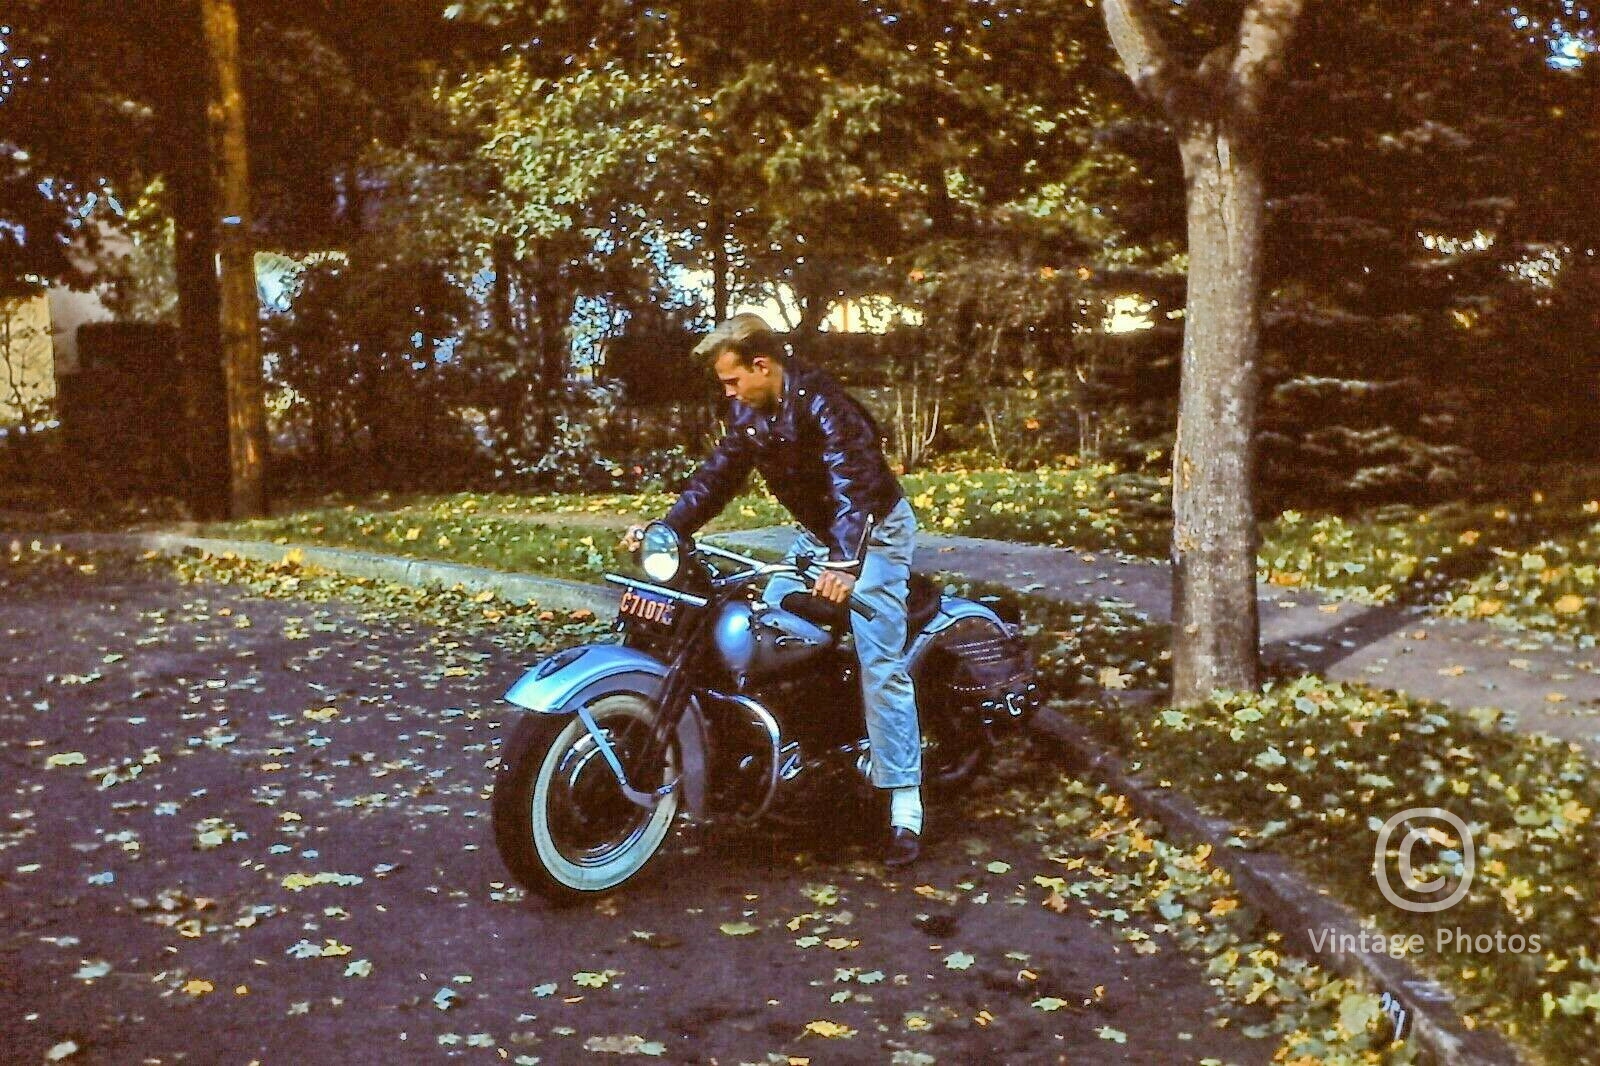 1958 Young Man on Harley Davidson